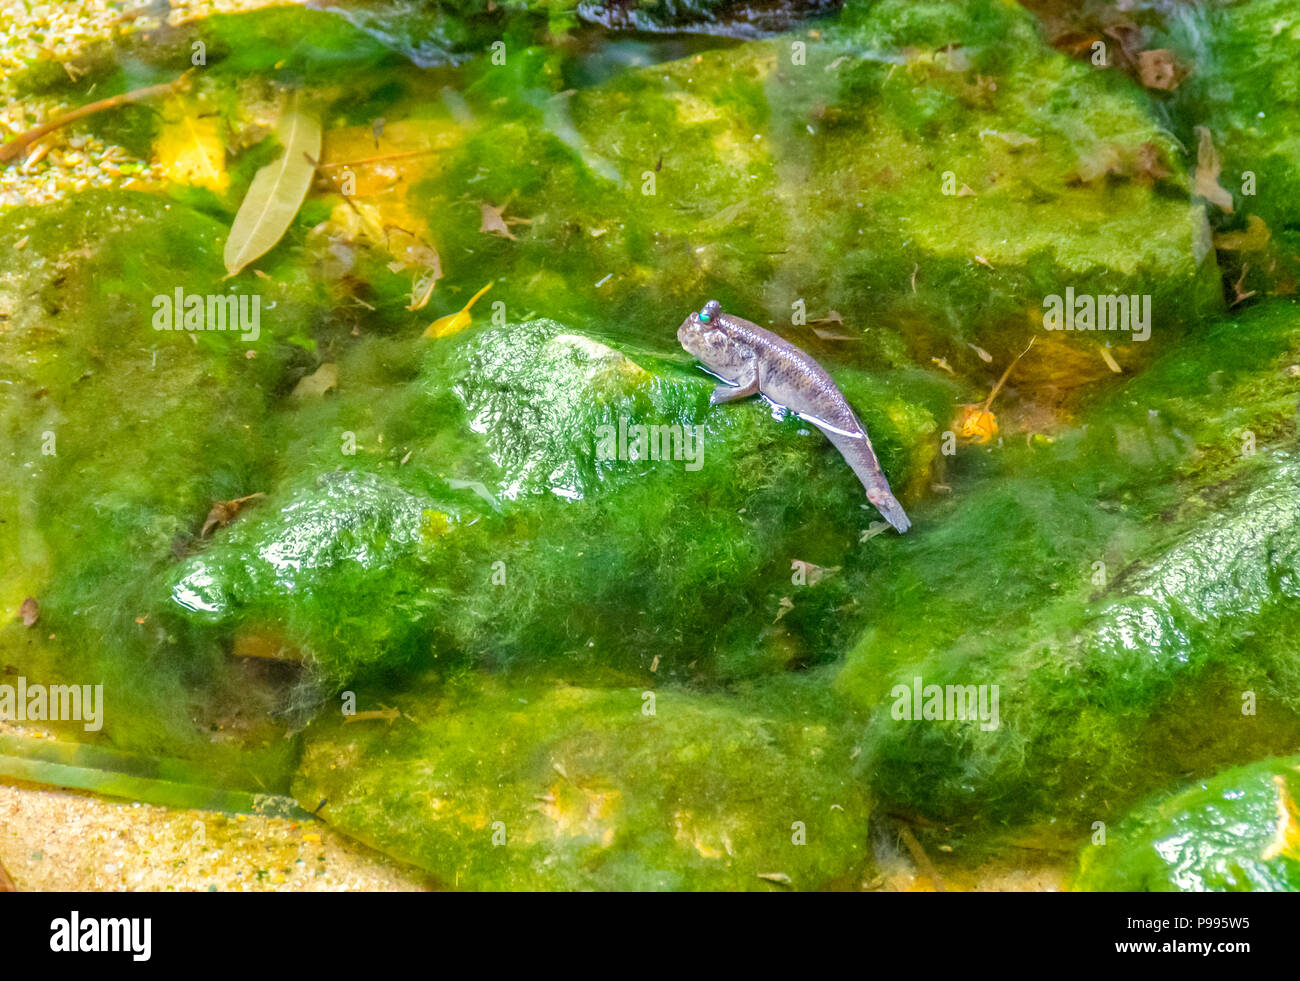 a mudskipper fish in riparian wet ambiance Stock Photo